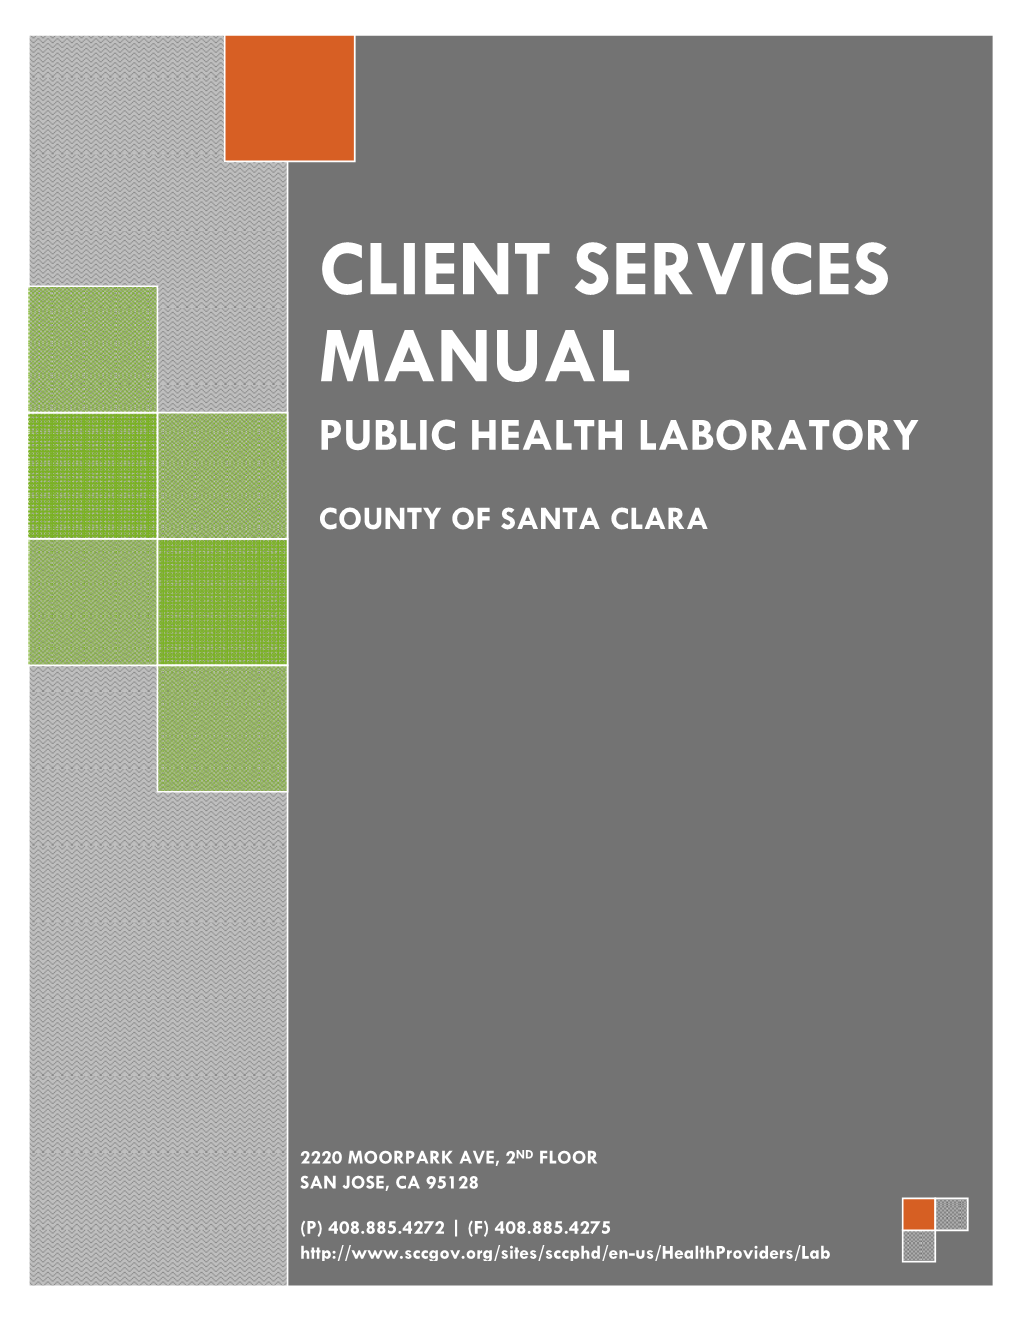 Client Services Manual Public Health Laboratory